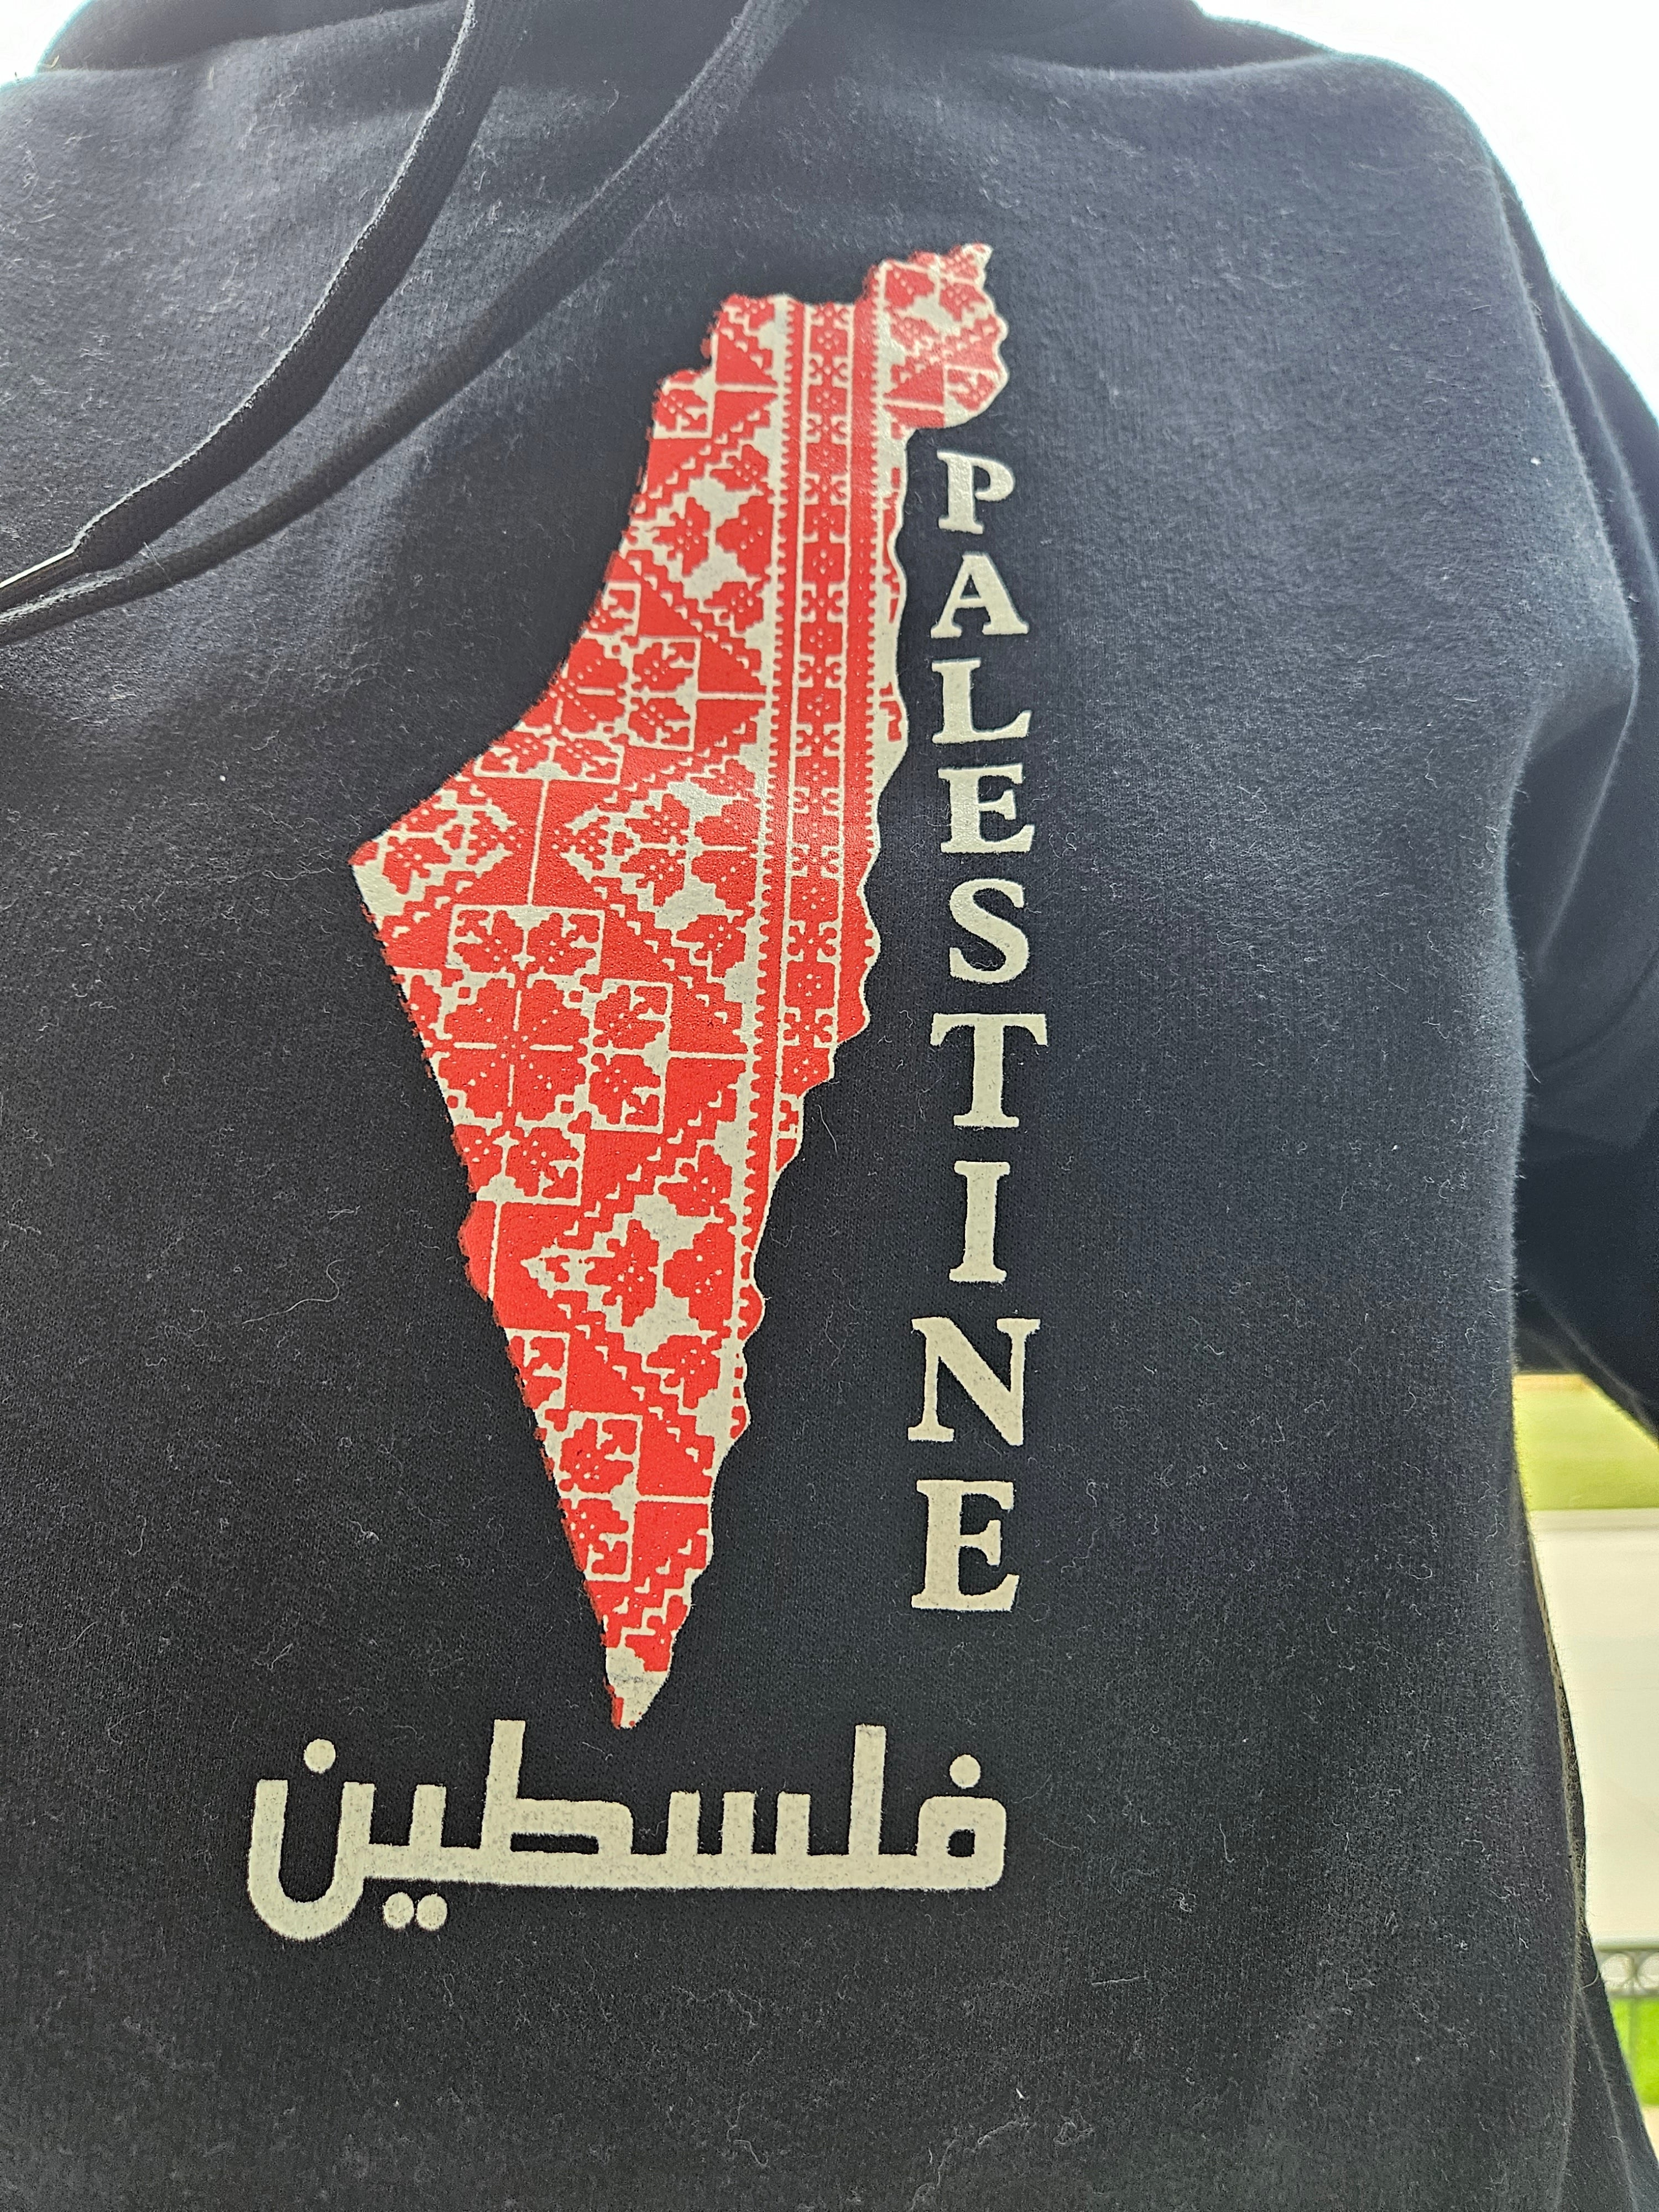 Palestine Tatreez Map Hoodie or Long sleeve - Kids & Adult sizes - Habibi Heritage